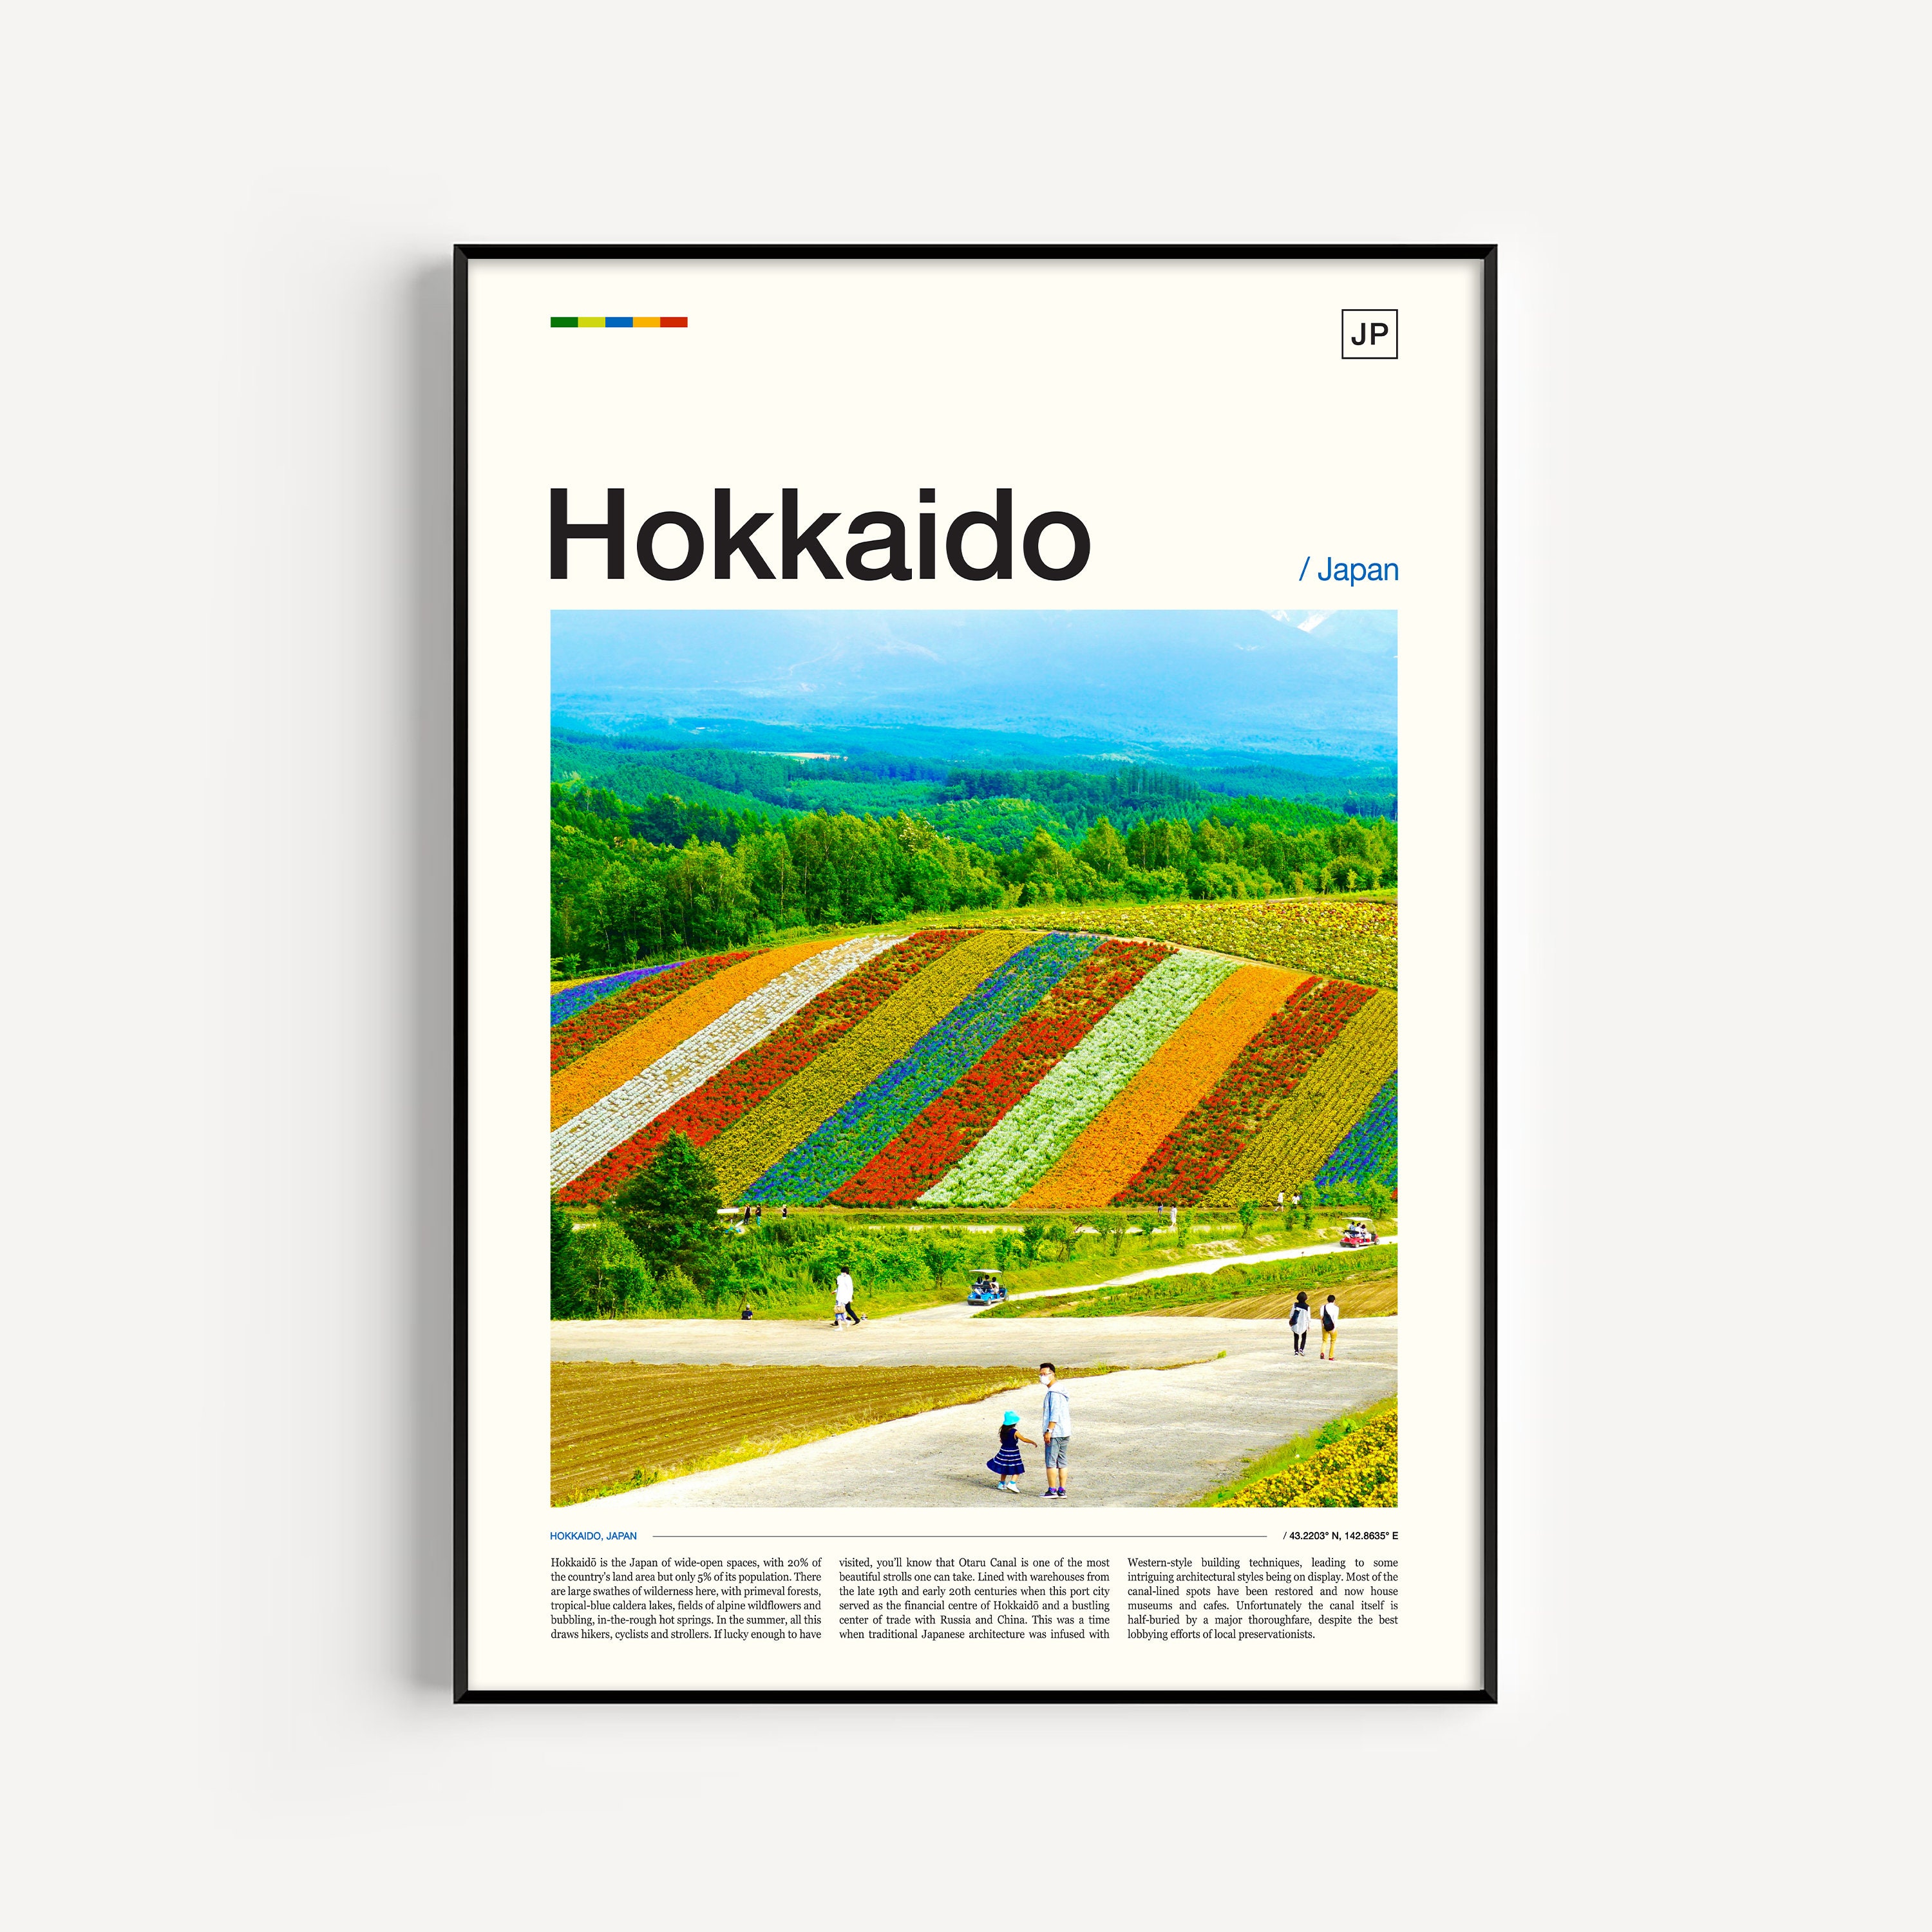 Field of Flowers (Kamifurano) Hokkaido Japan Poster Print - 48 x 16